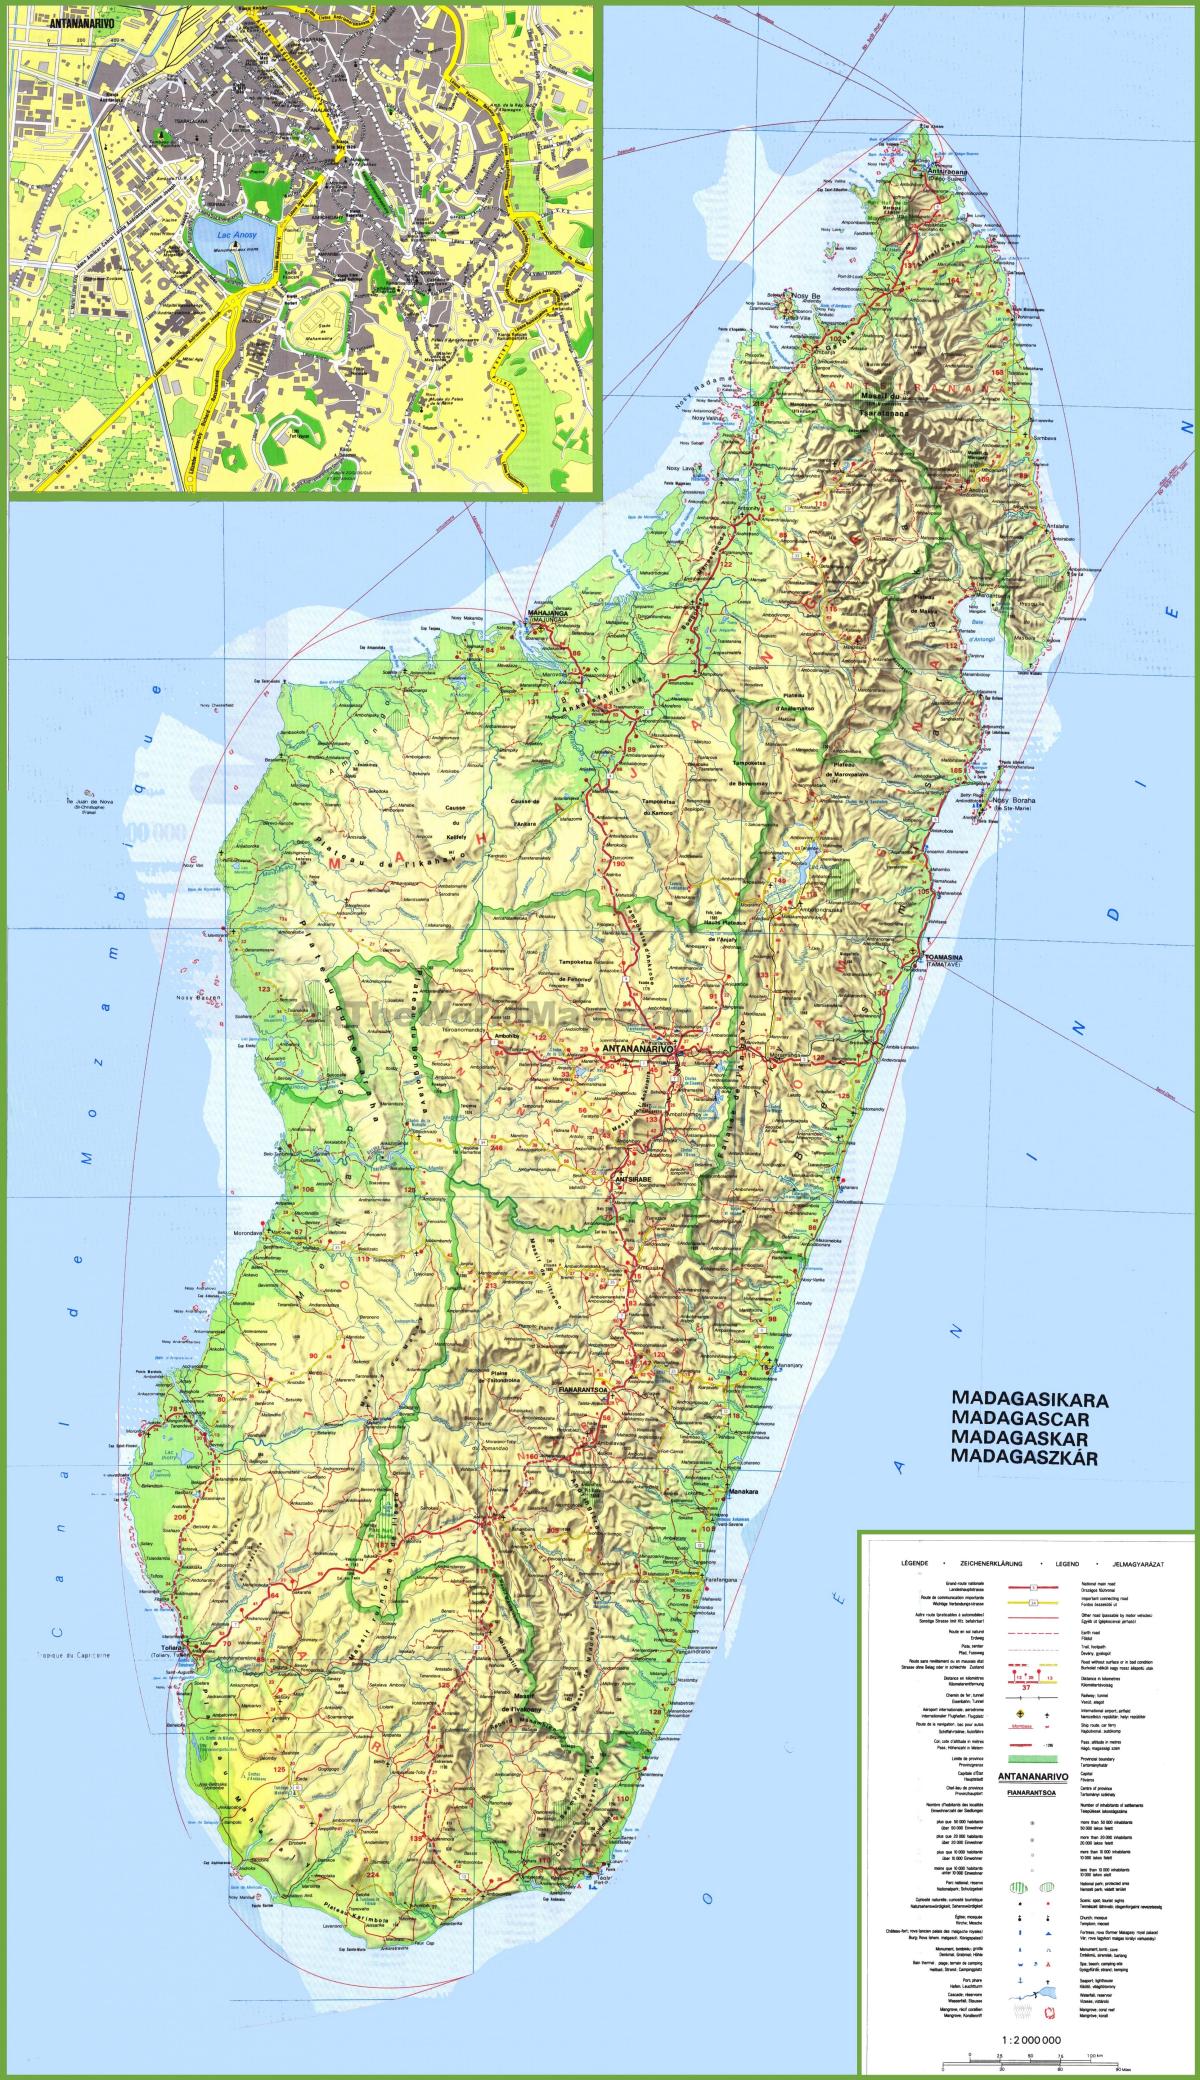 map showing Madagascar